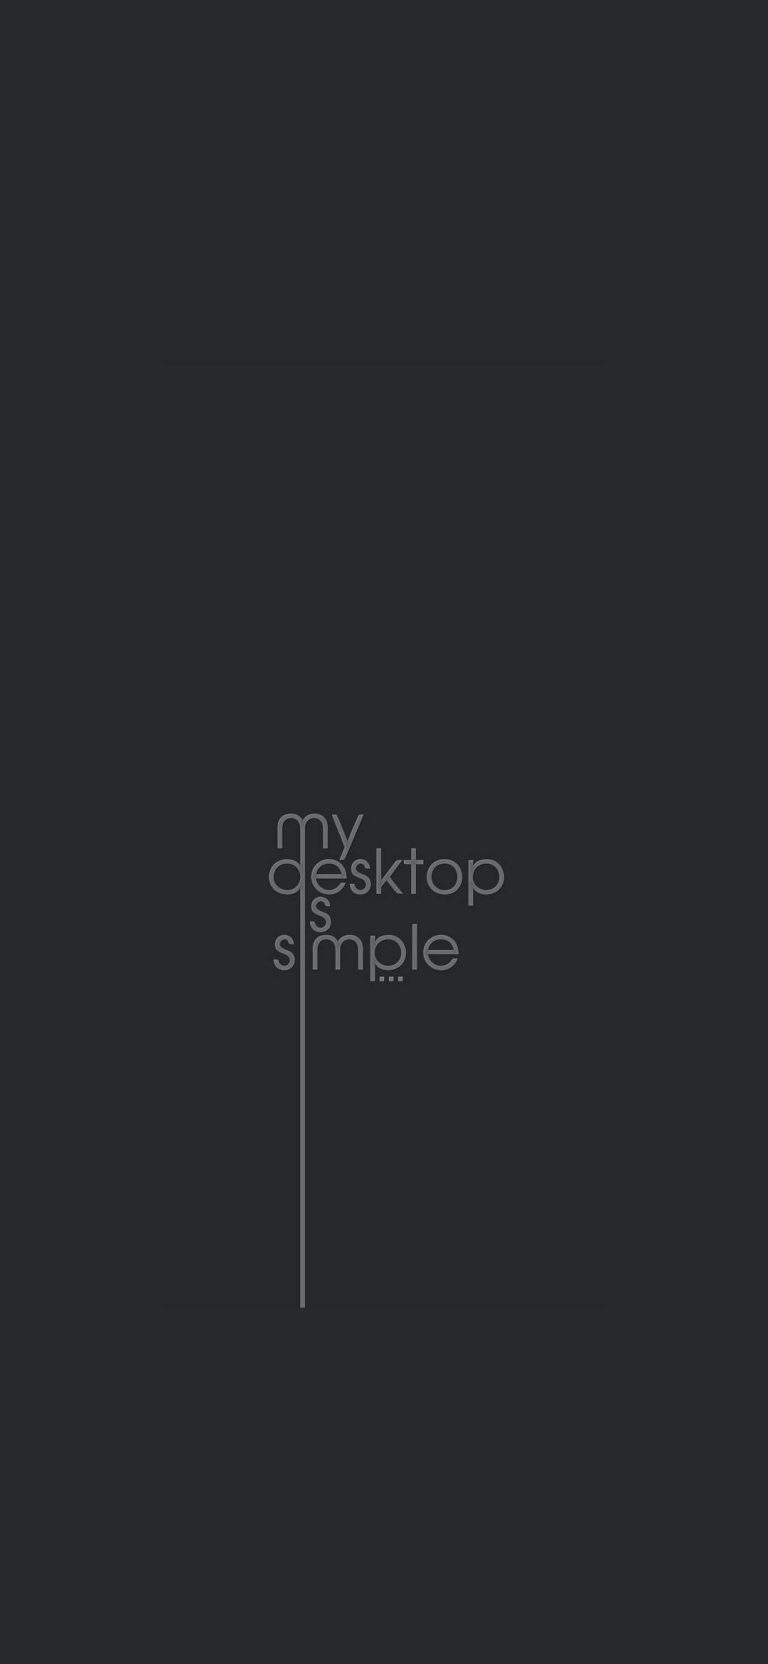 simple desktops 1080x1920